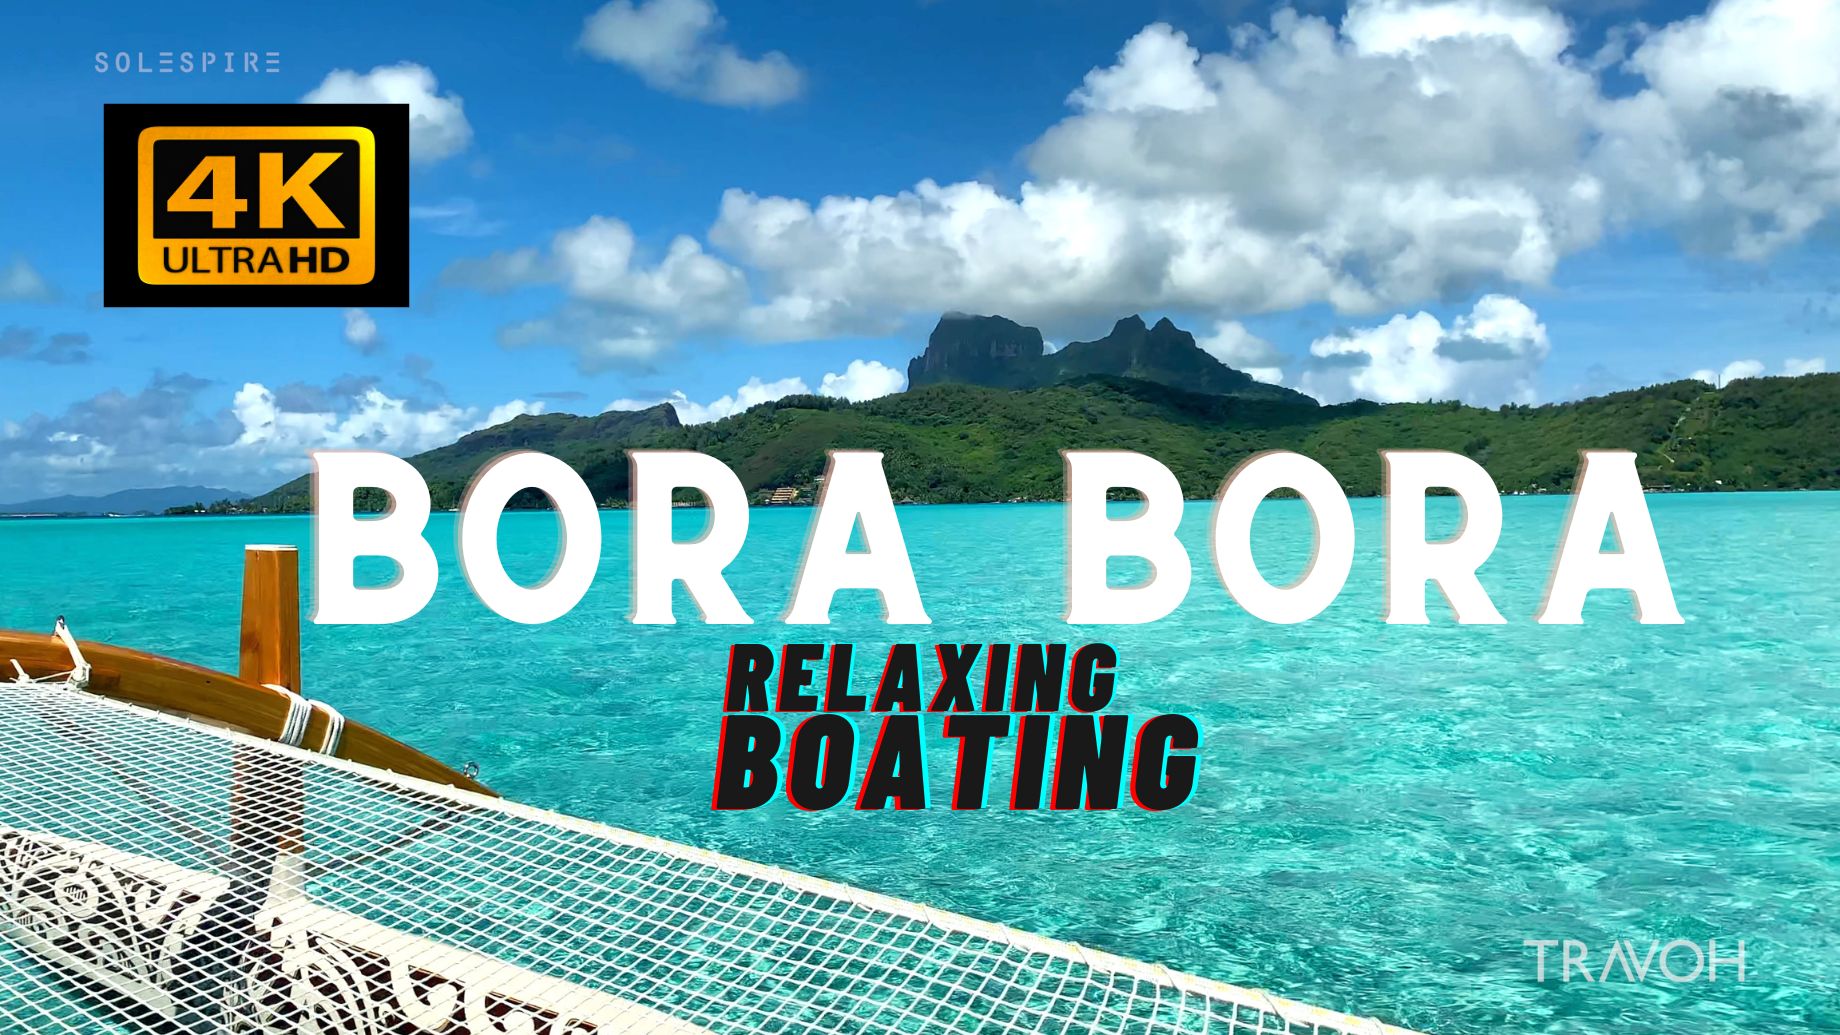 Bora Bora Boating - Private Island Tropical Beach - Motu Tane, French Polynesia - 4K HD Travel